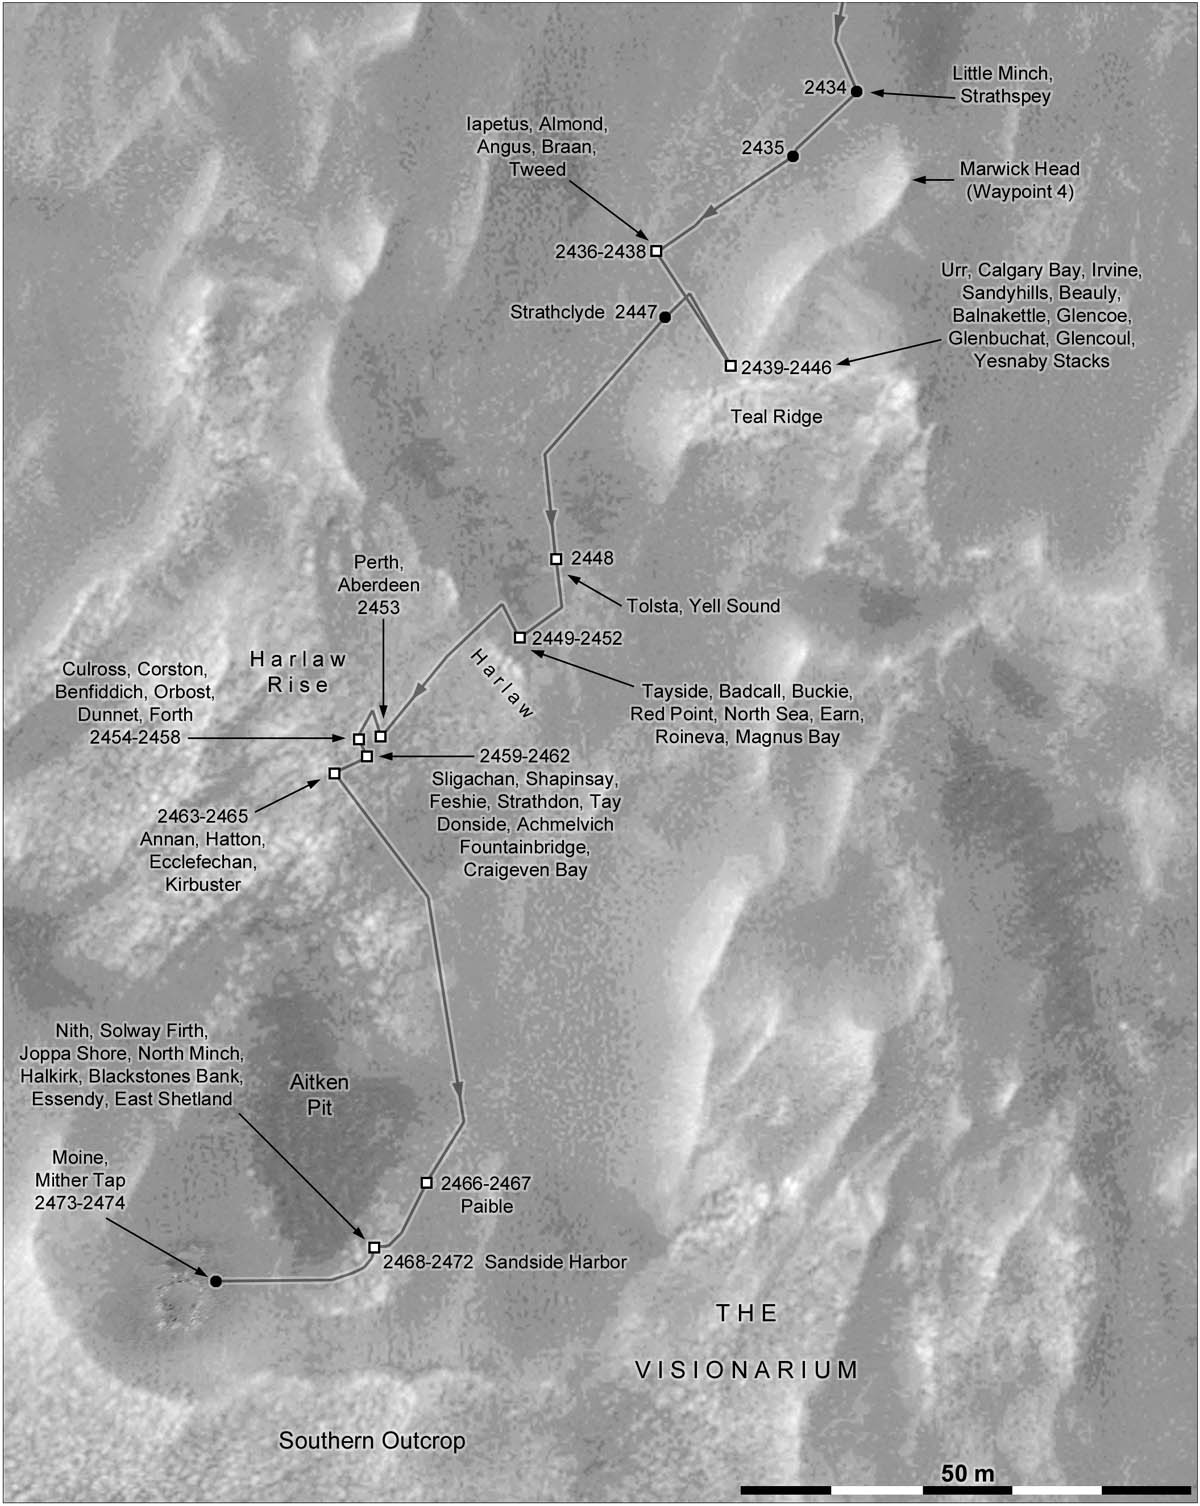 MARS: CURIOSITY u krateru  GALE Vol II. - Page 46 Index